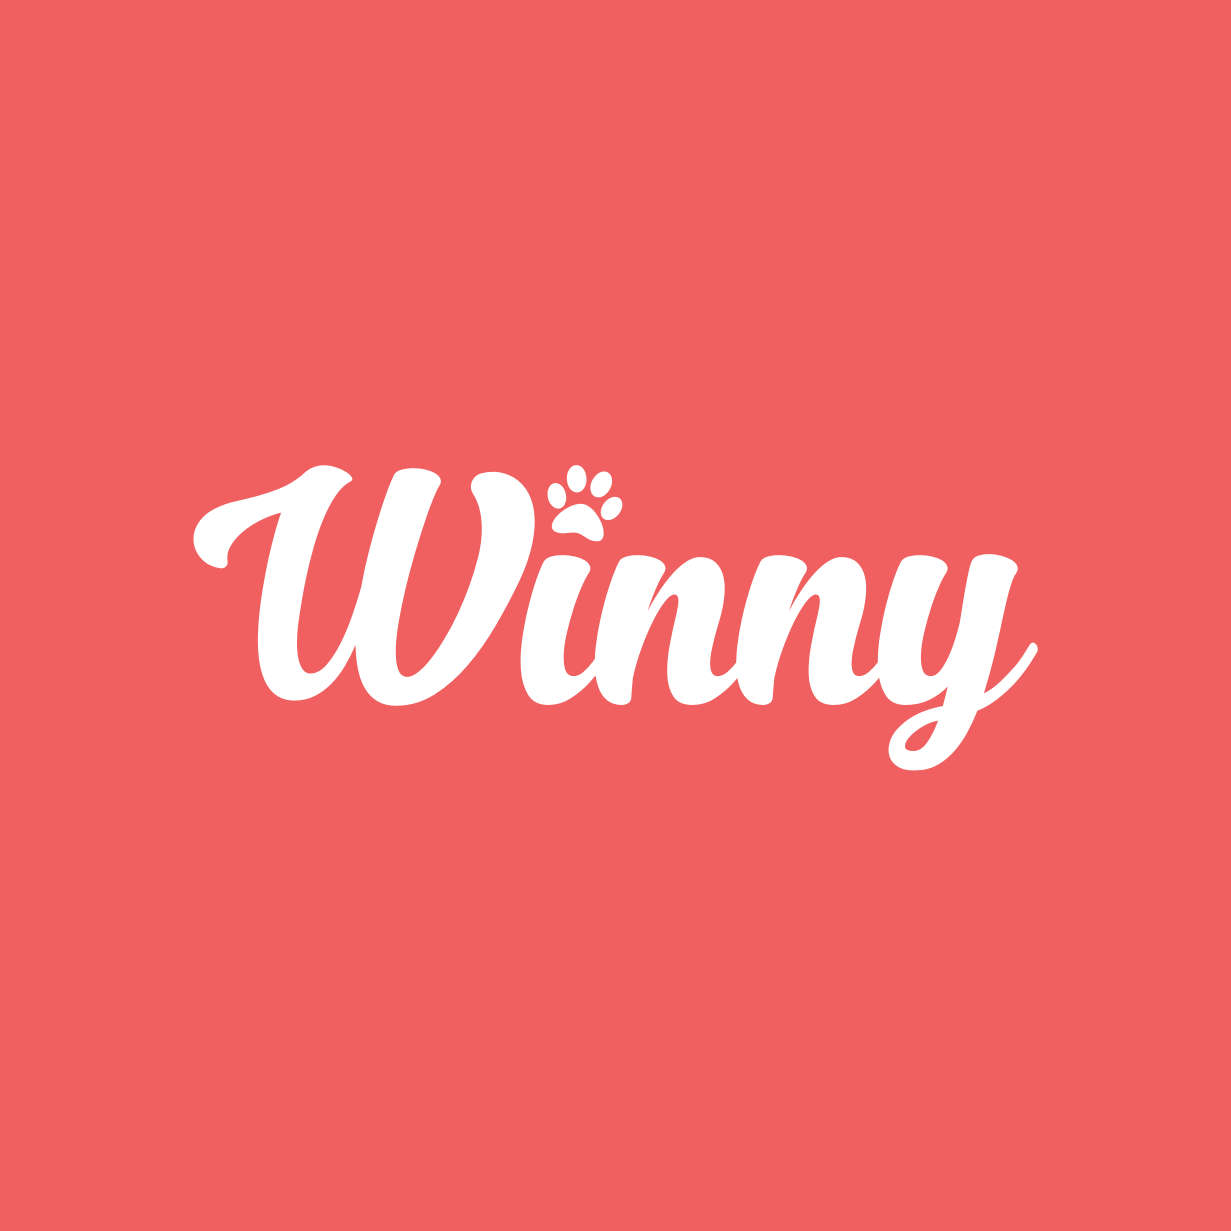 Winnie - Crunchbase Company Profile & Funding